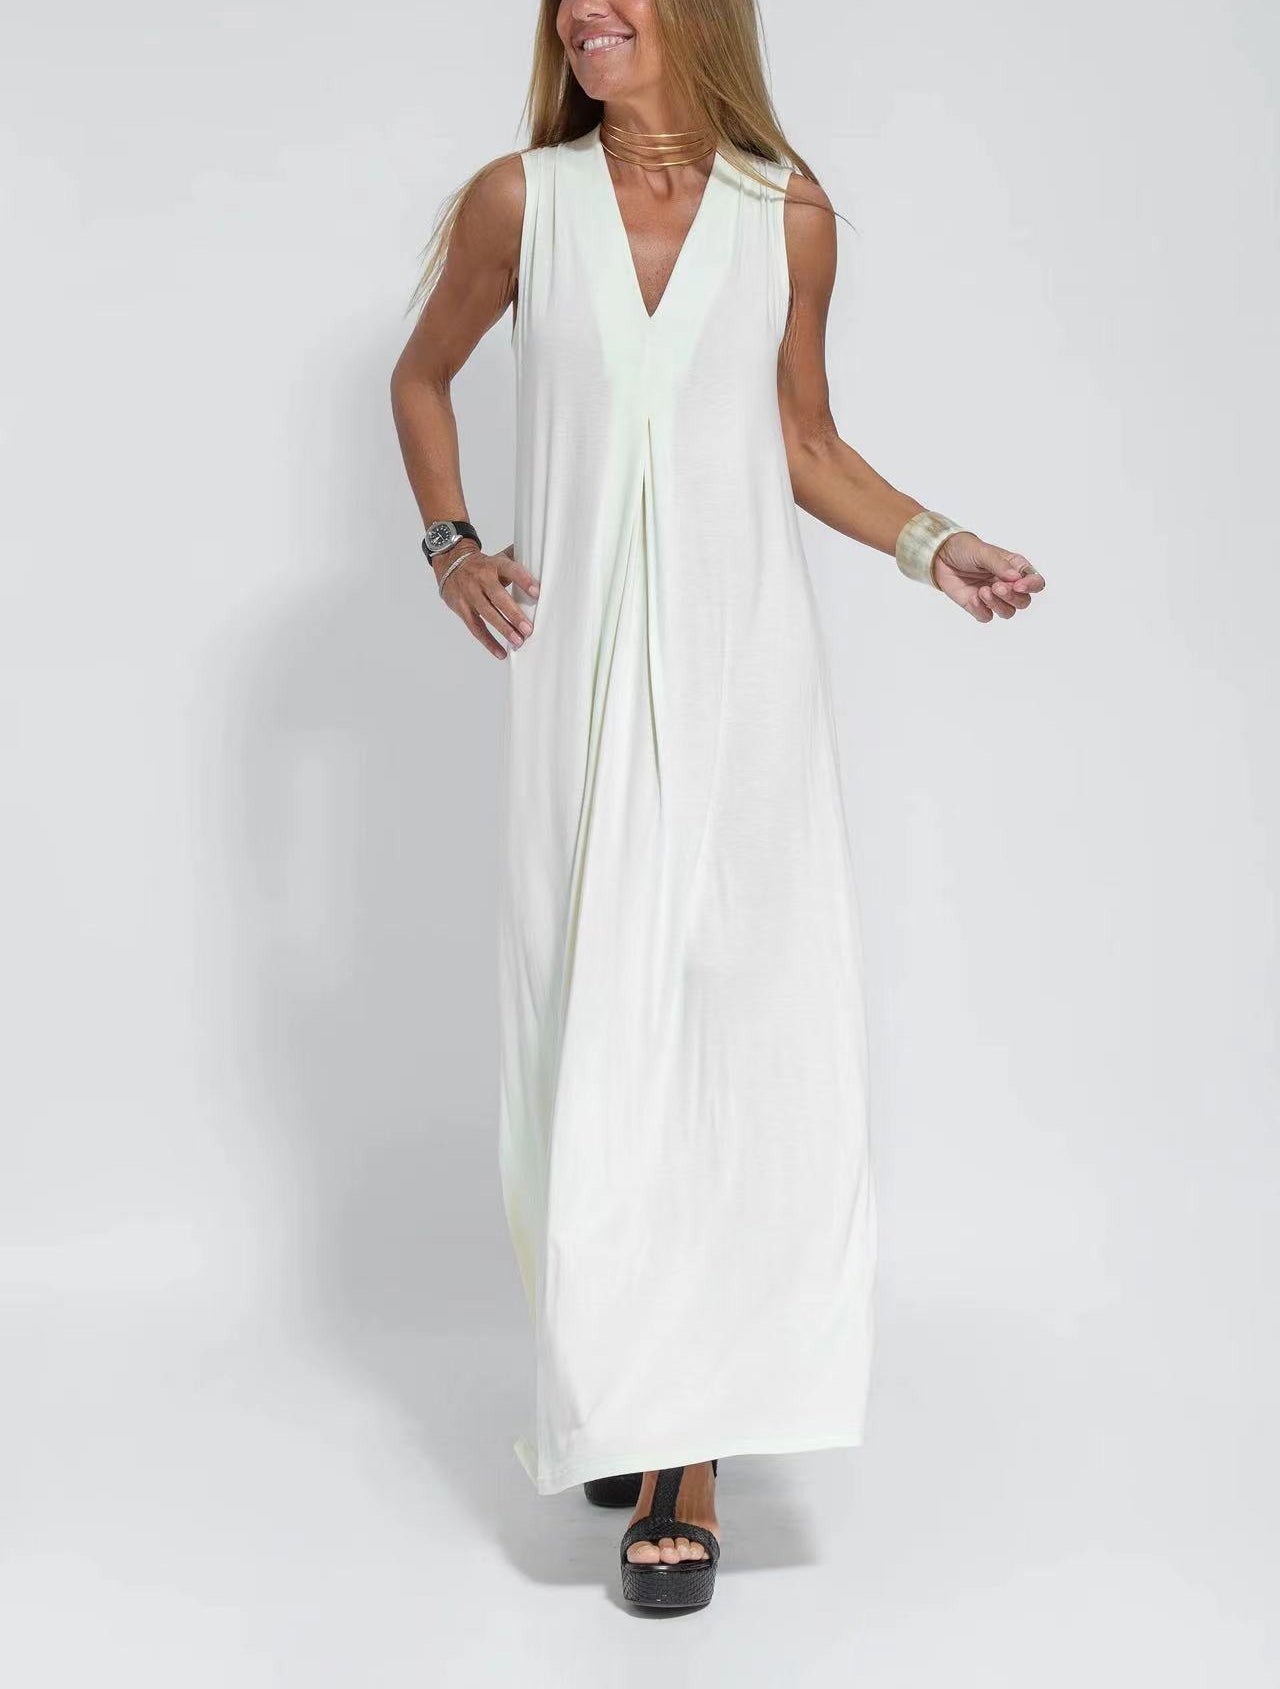 NTG Fad Dress White / S Elegant Solid Color Sleeveless Maxi Dress